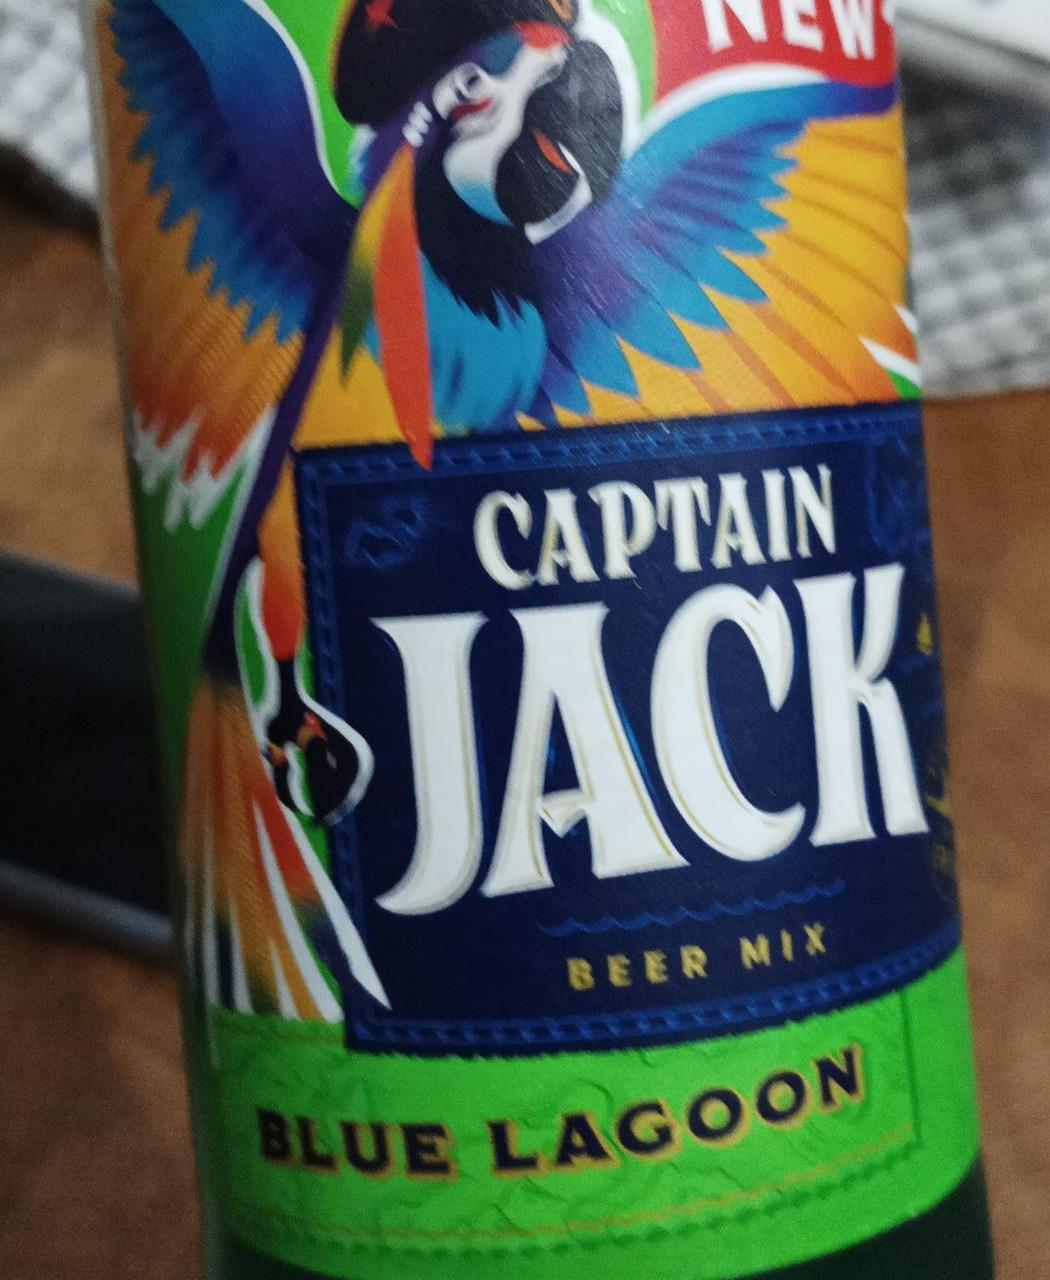 Fotografie - Blue Lagoon Beer Mix Captain Jack